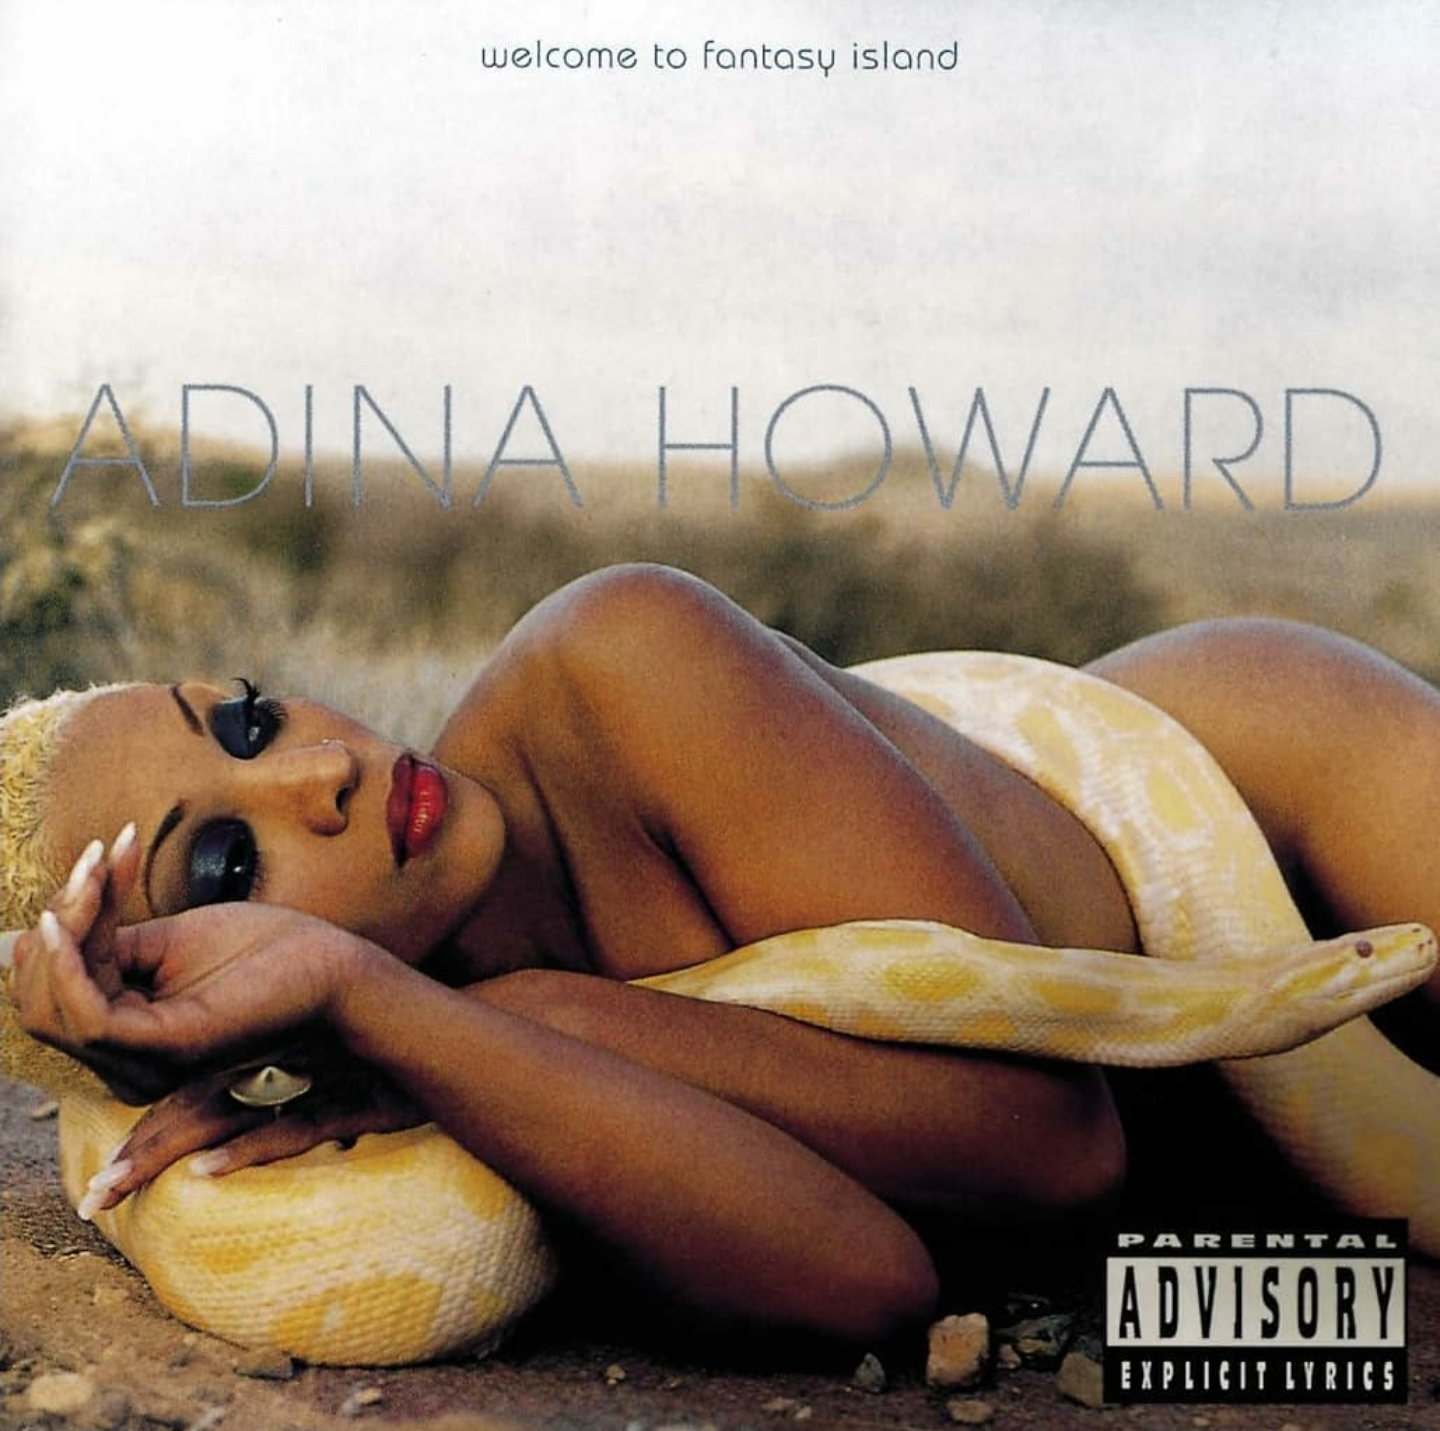 [Albums You Should Love] Adina Howard – “Welcome to Fantasy Island”